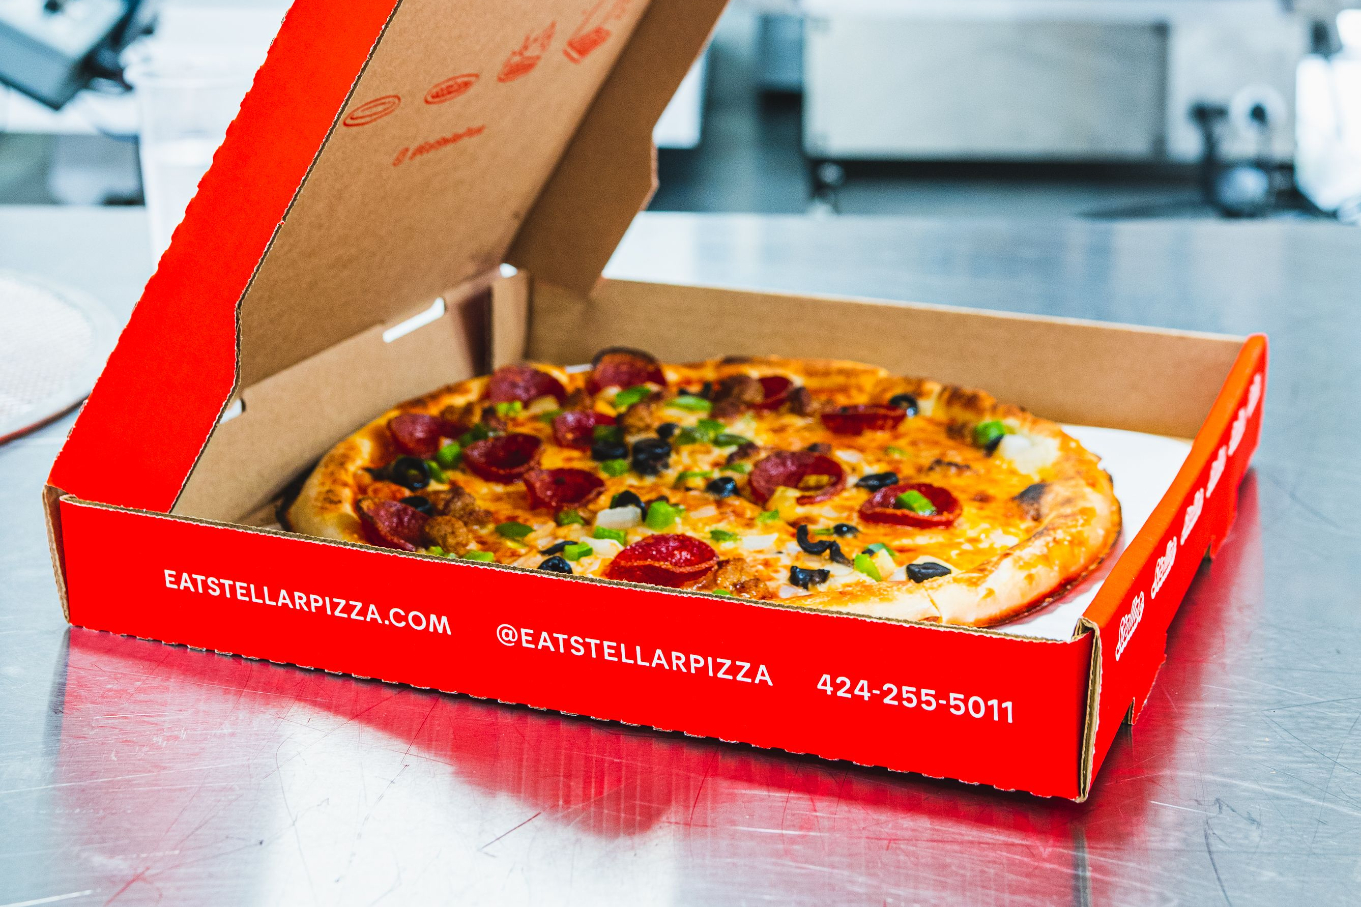 A Stellar Pizza pie in box.